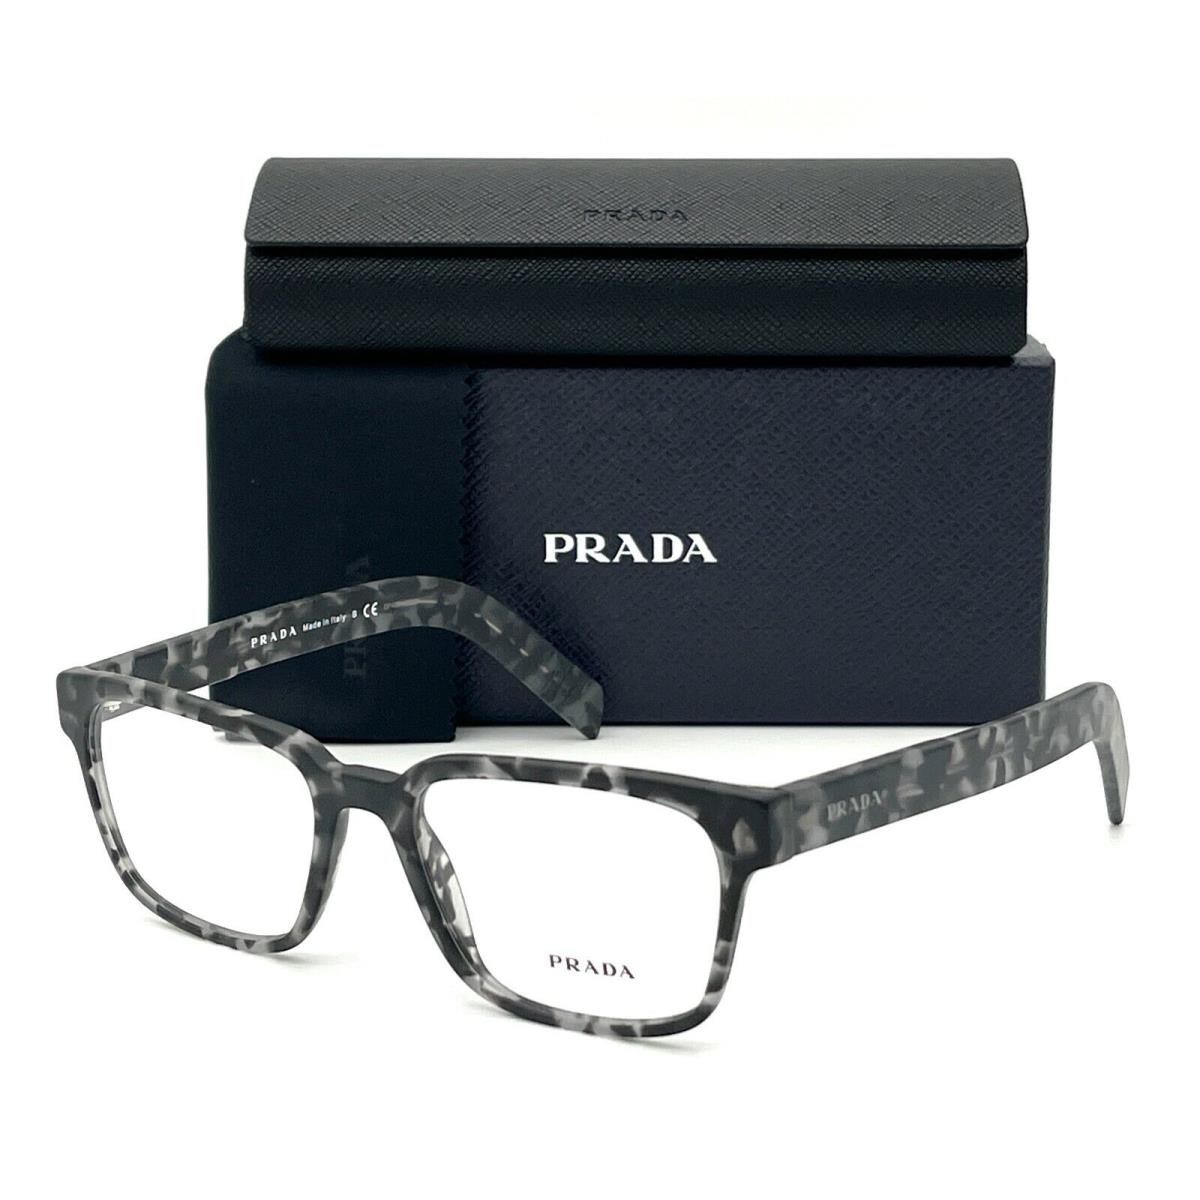 Prada VPR15W VH3-1O1 Spotted Gray Havana / Demo Lens 53mm Eyeglasses - Spotted Gray Havana Frame